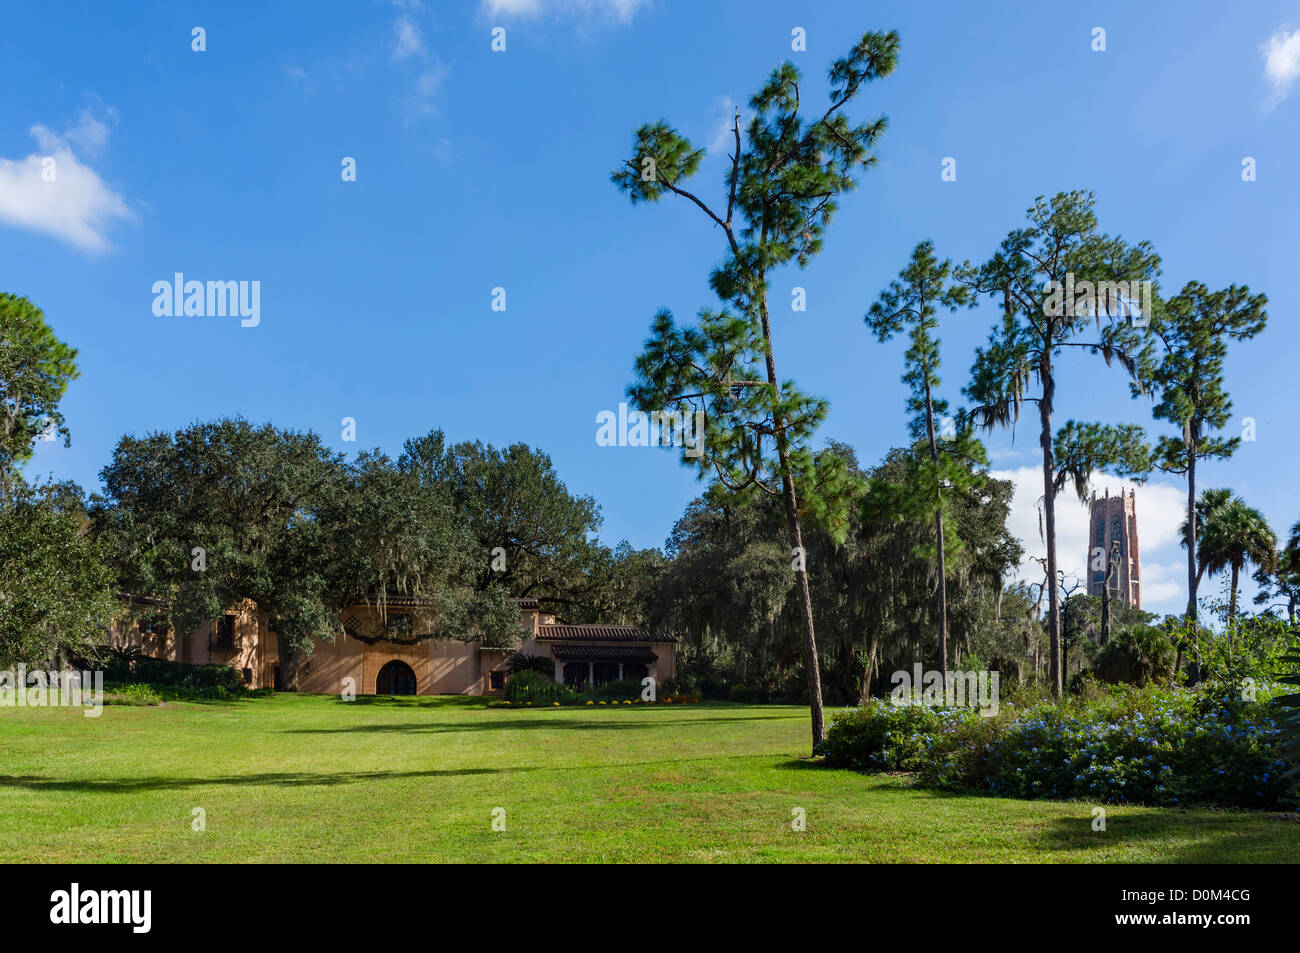 Pinienwald Estate, 1930er Jahre mediterrane Villa mit Gesang Turm in Ferne, Bok Tower Gardens, Lake Wales, Florida, USA Stockfoto